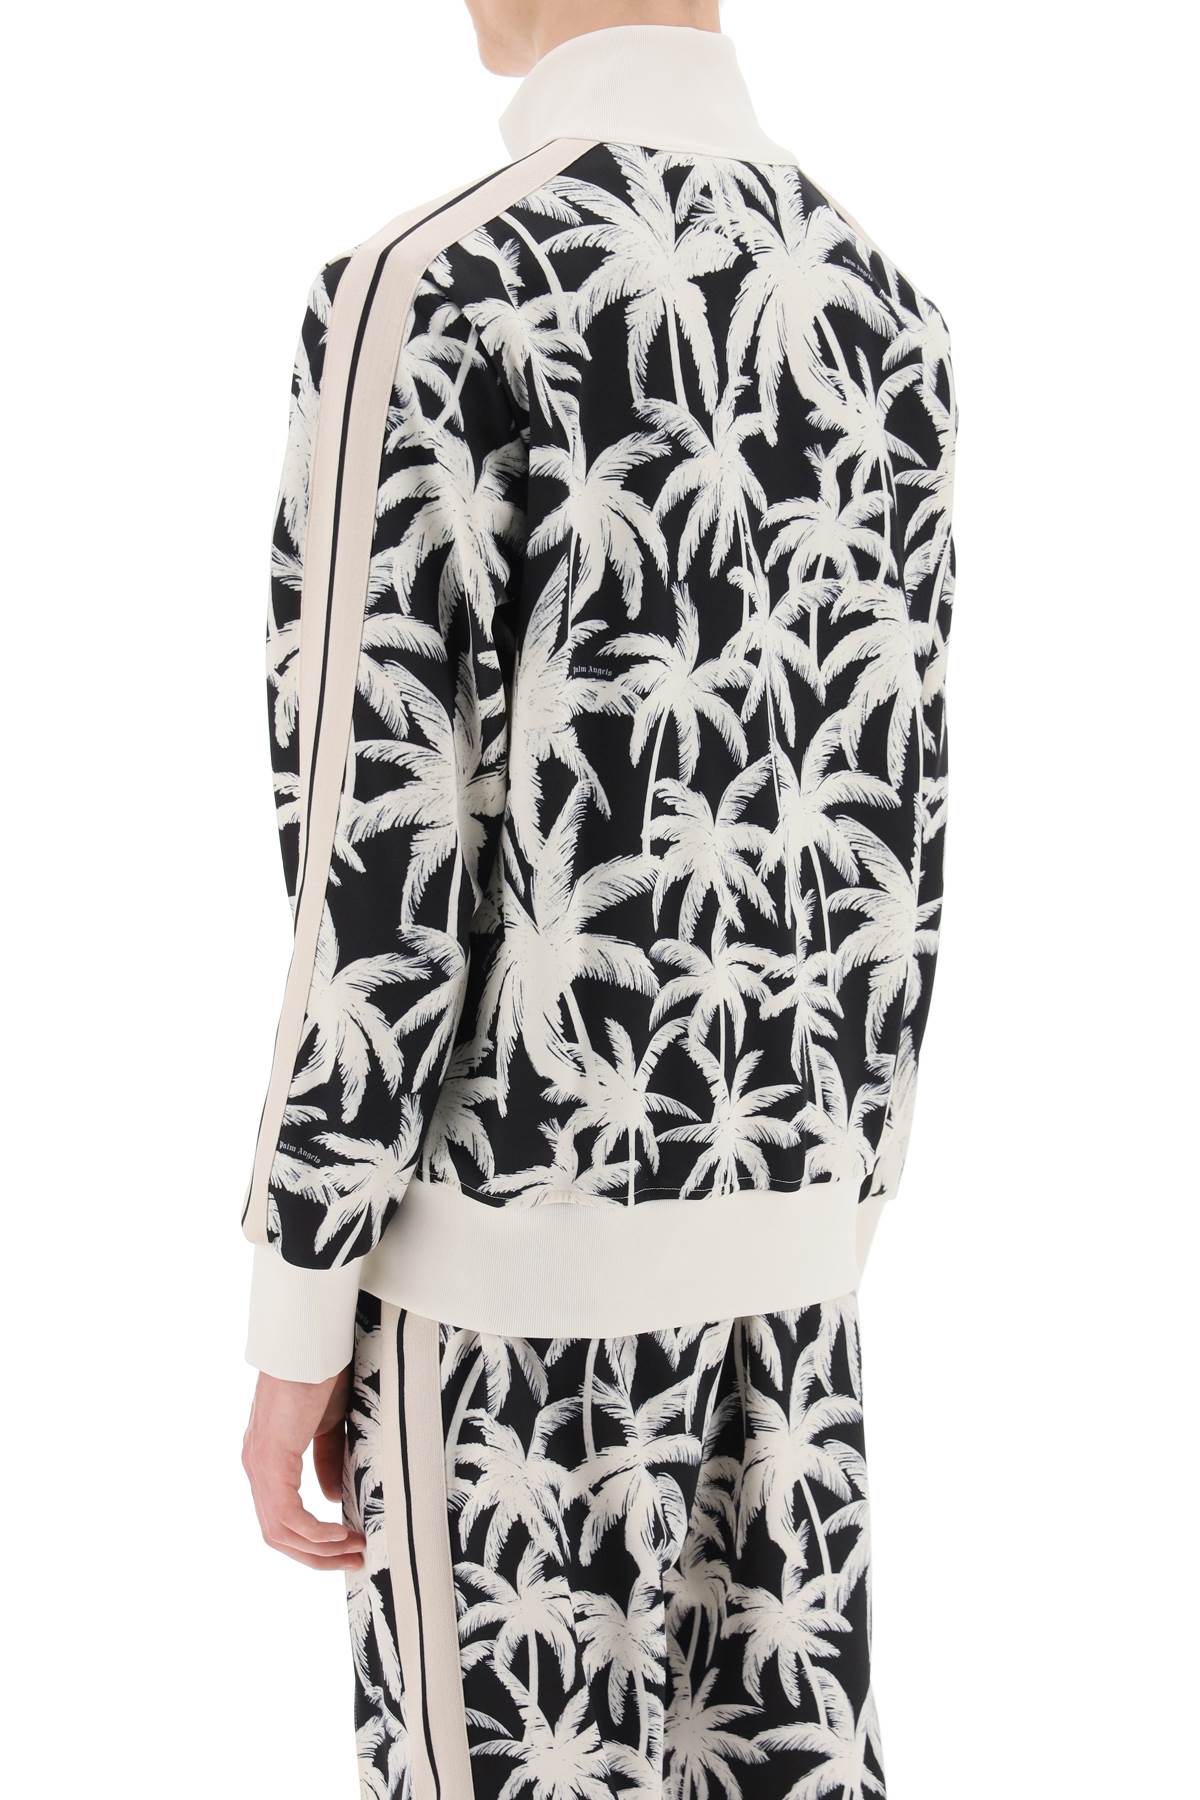 Palm angels zip-up sweatshirt with palms print-2